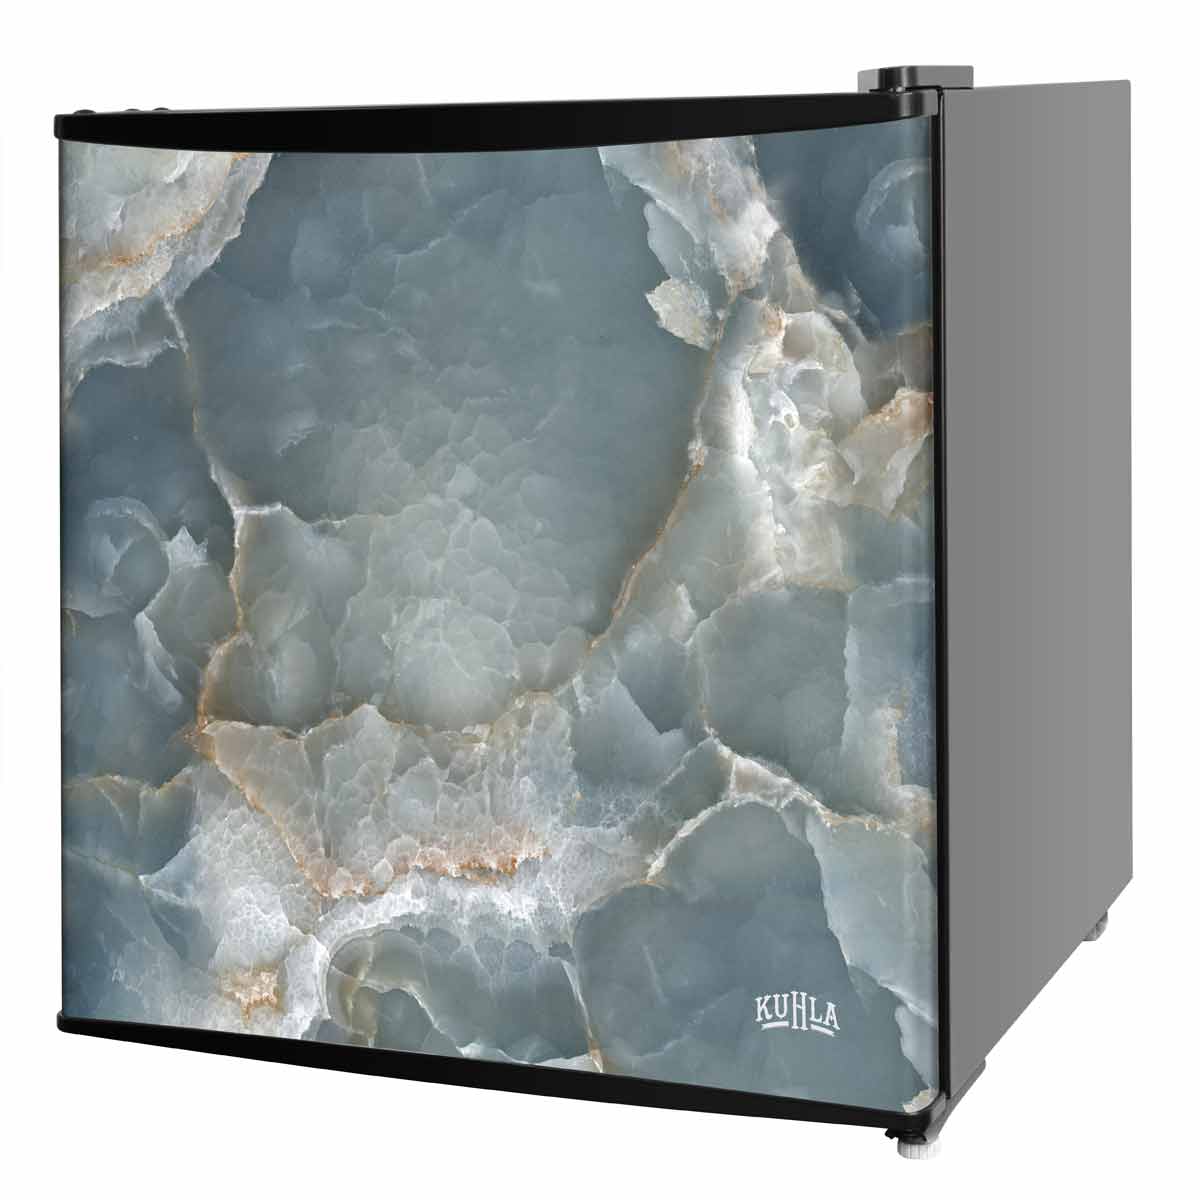 Kuhla KTTF4BGB-1023 Marble Design 43L Mini Fridge With Ice Box - Black